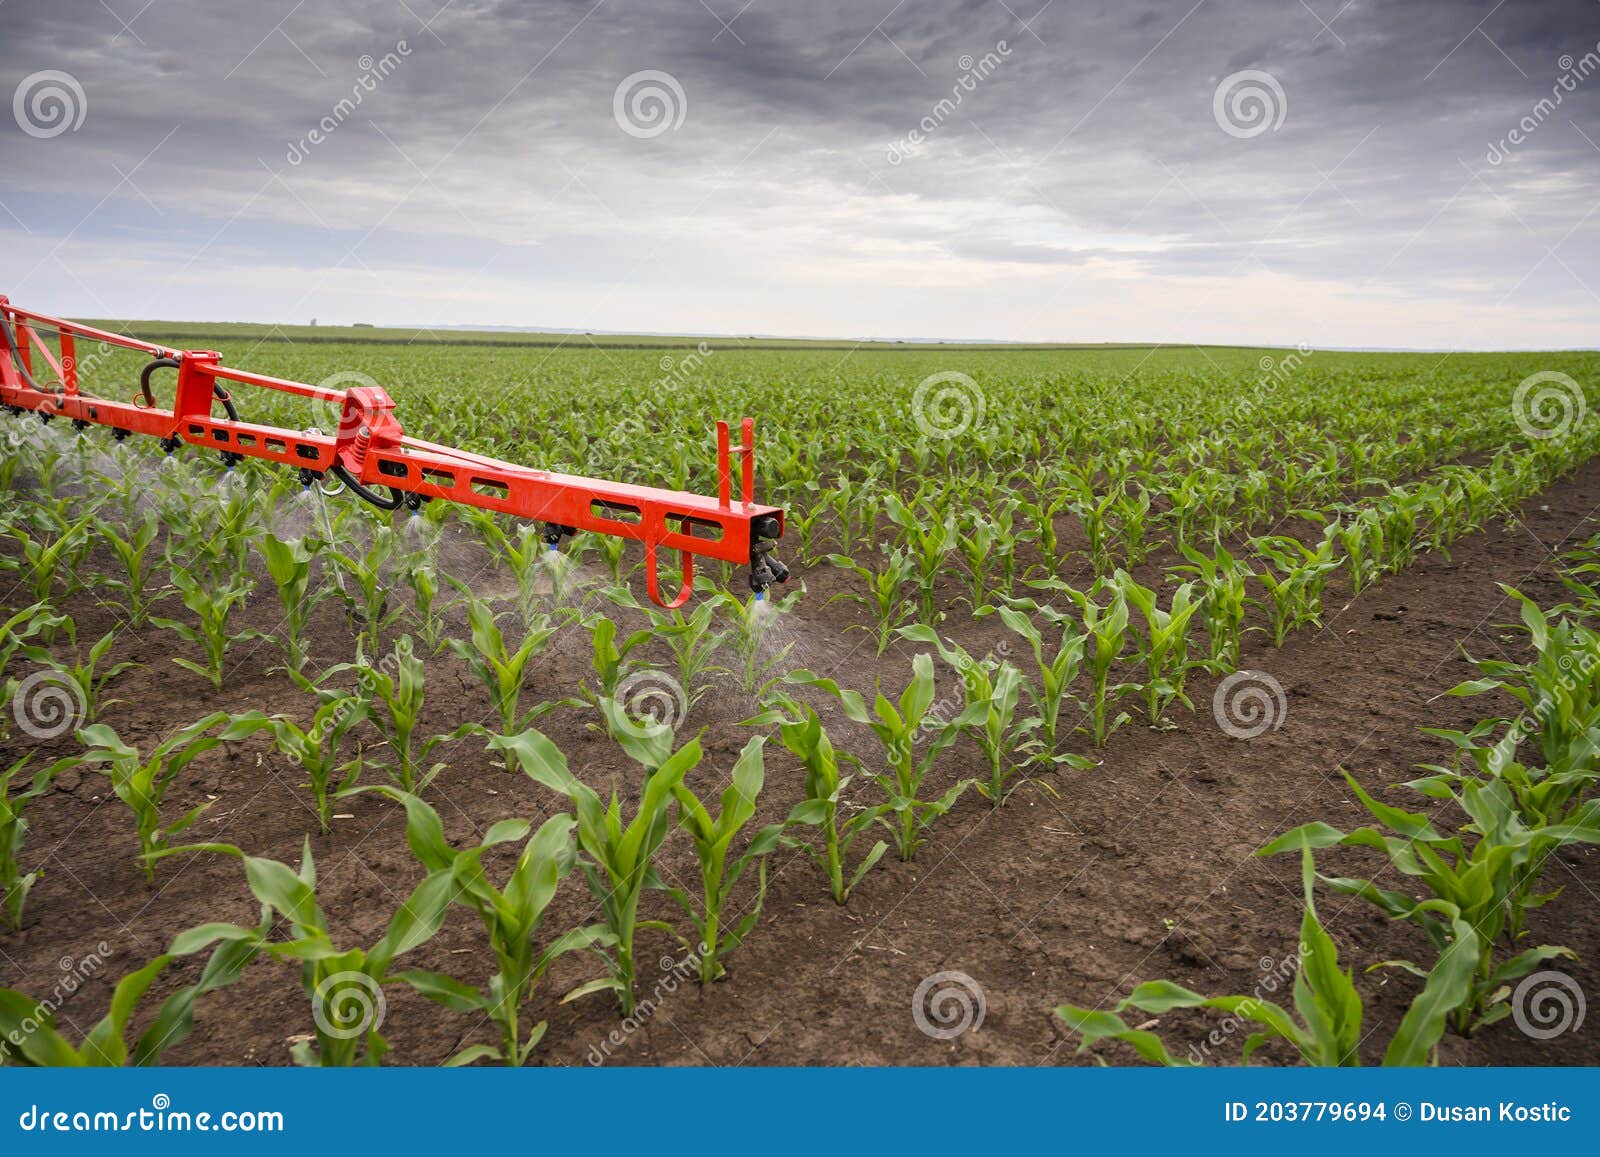 tractor spraying corn field